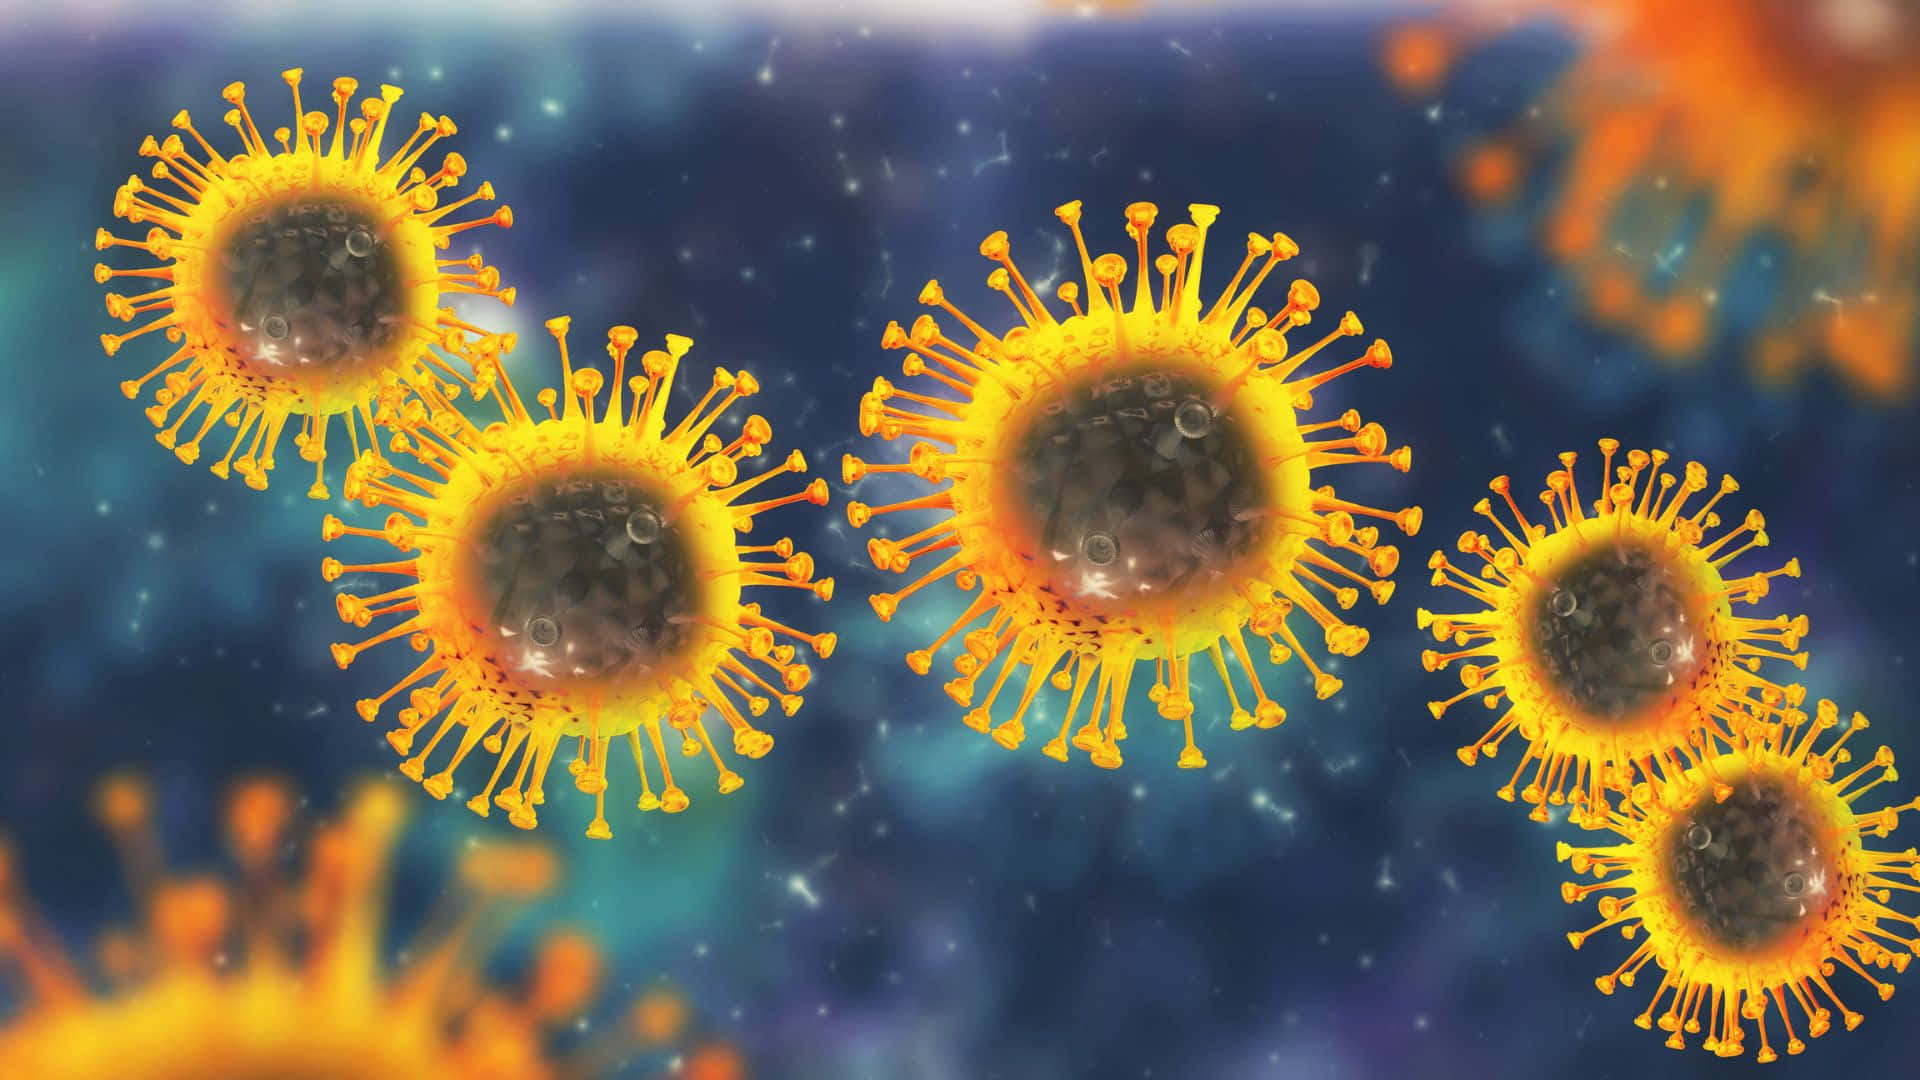 Virus Particles Illustration Wallpaper